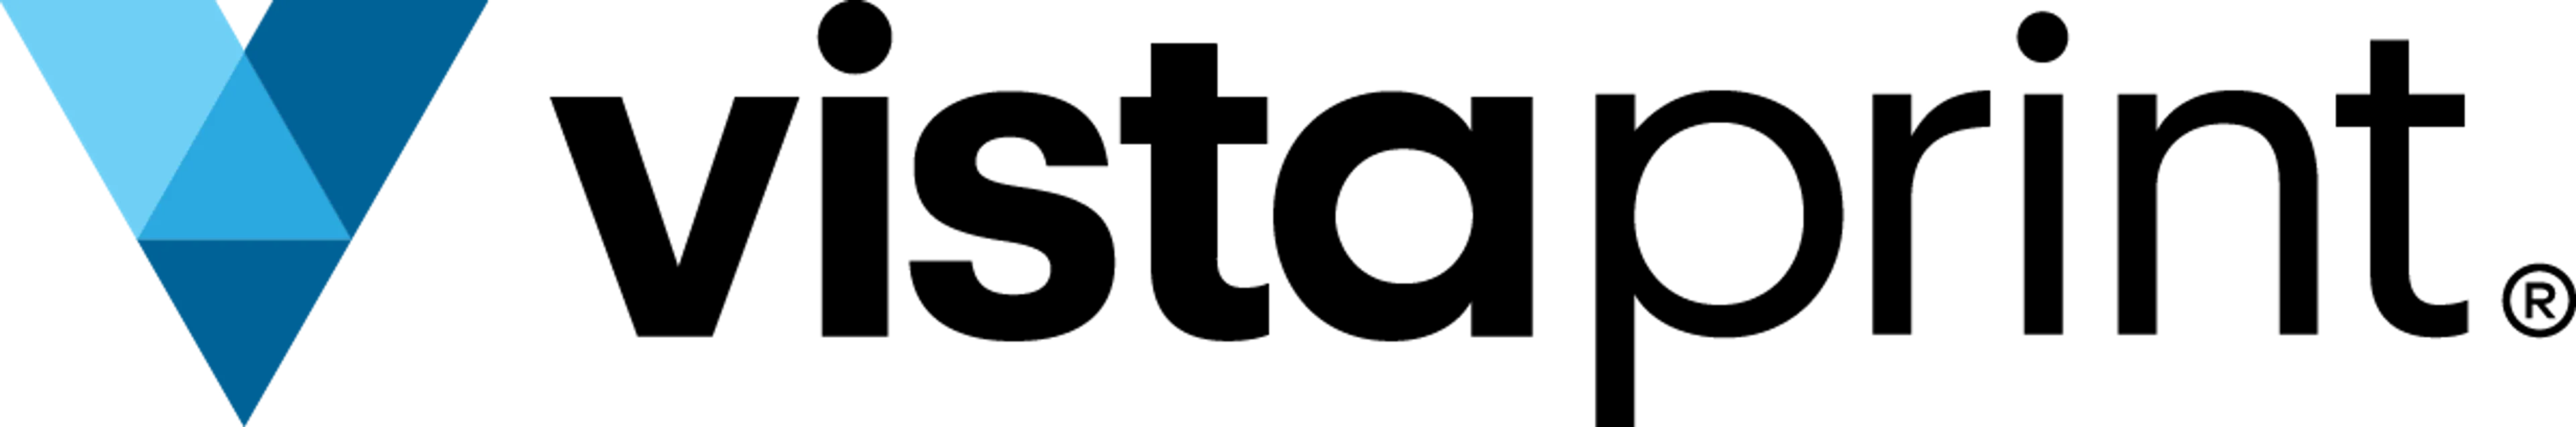 VISTAPRINT logo